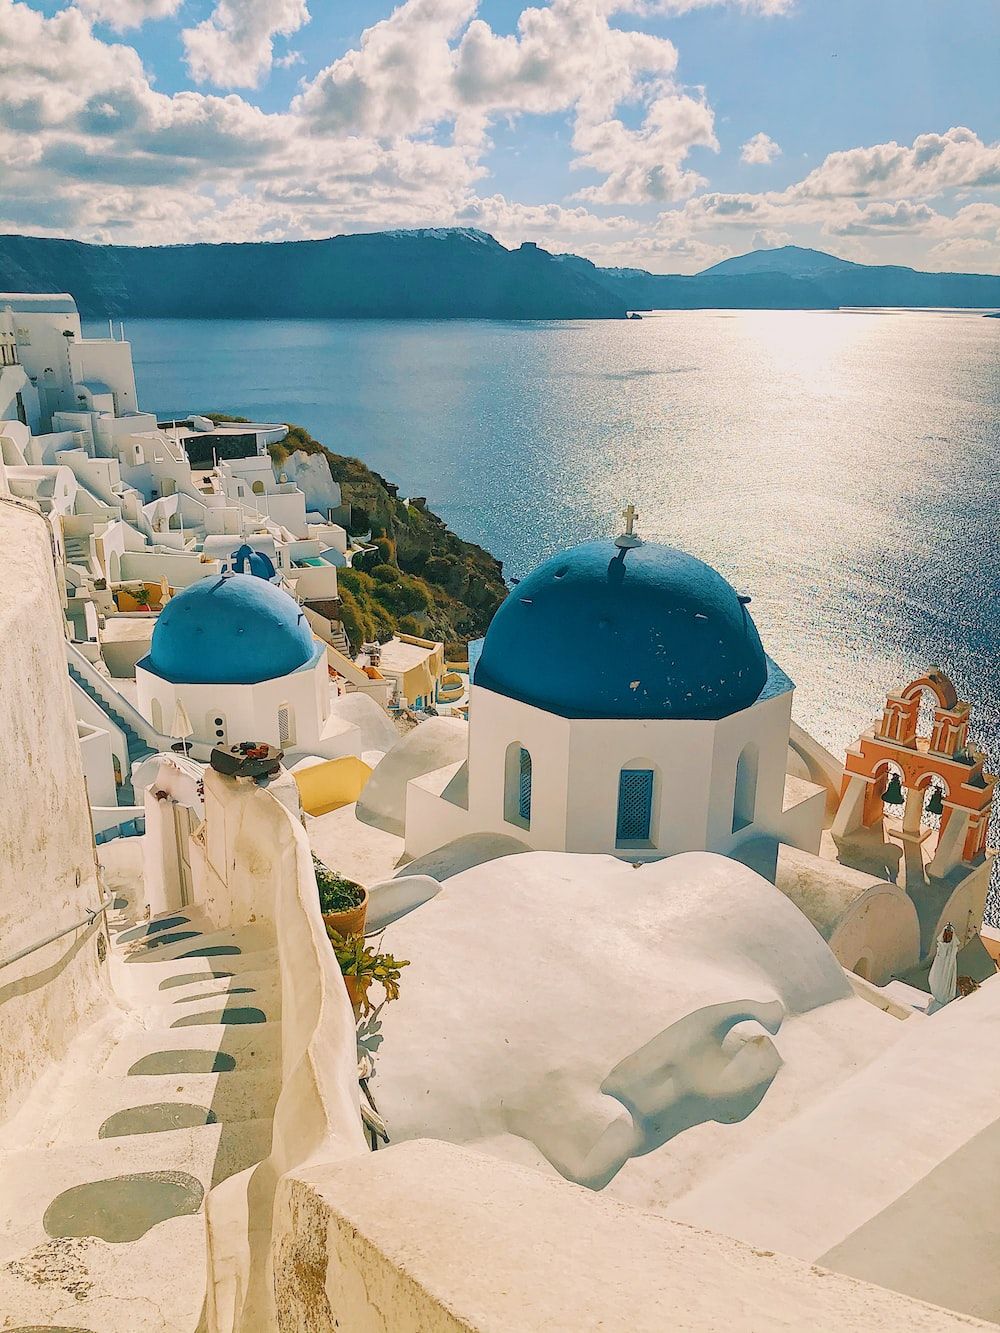  Griechenland Hintergrundbild 1000x1333. Beautiful Greece Picture. Download Free Image